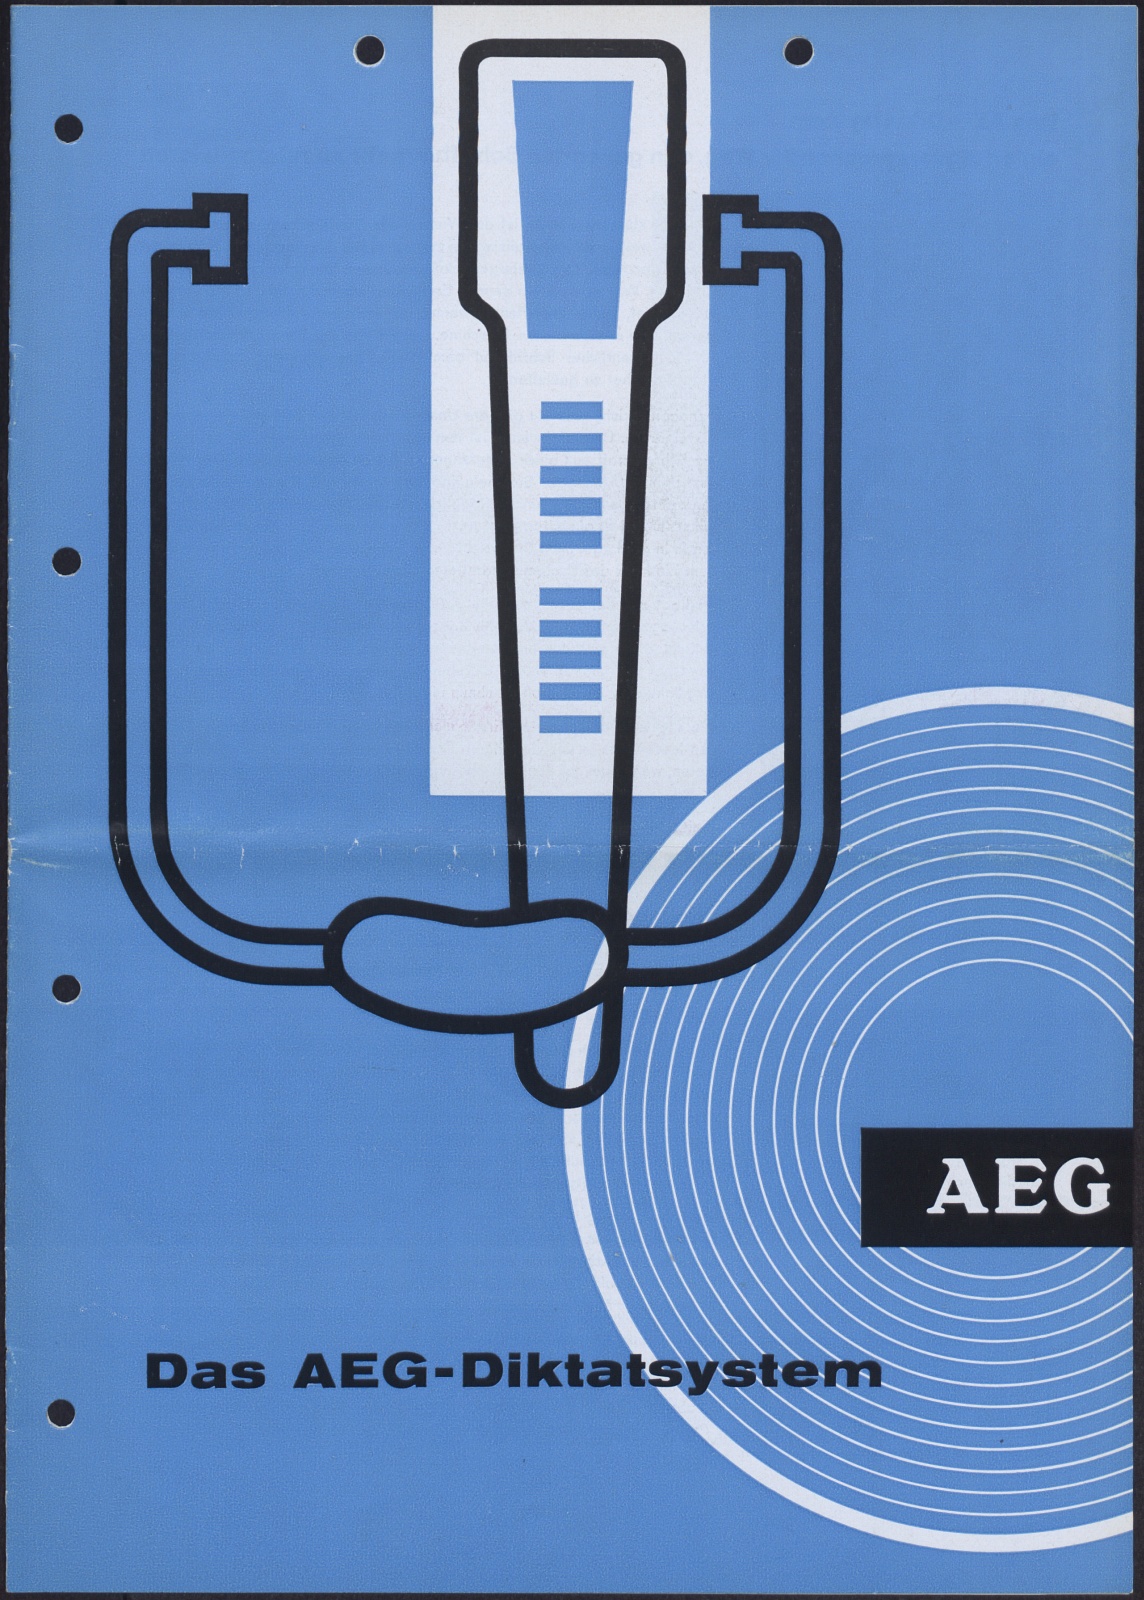 Werbeprospekt: Das AEG-Diktatsystem (Stiftung Deutsches Technikmuseum Berlin CC0)